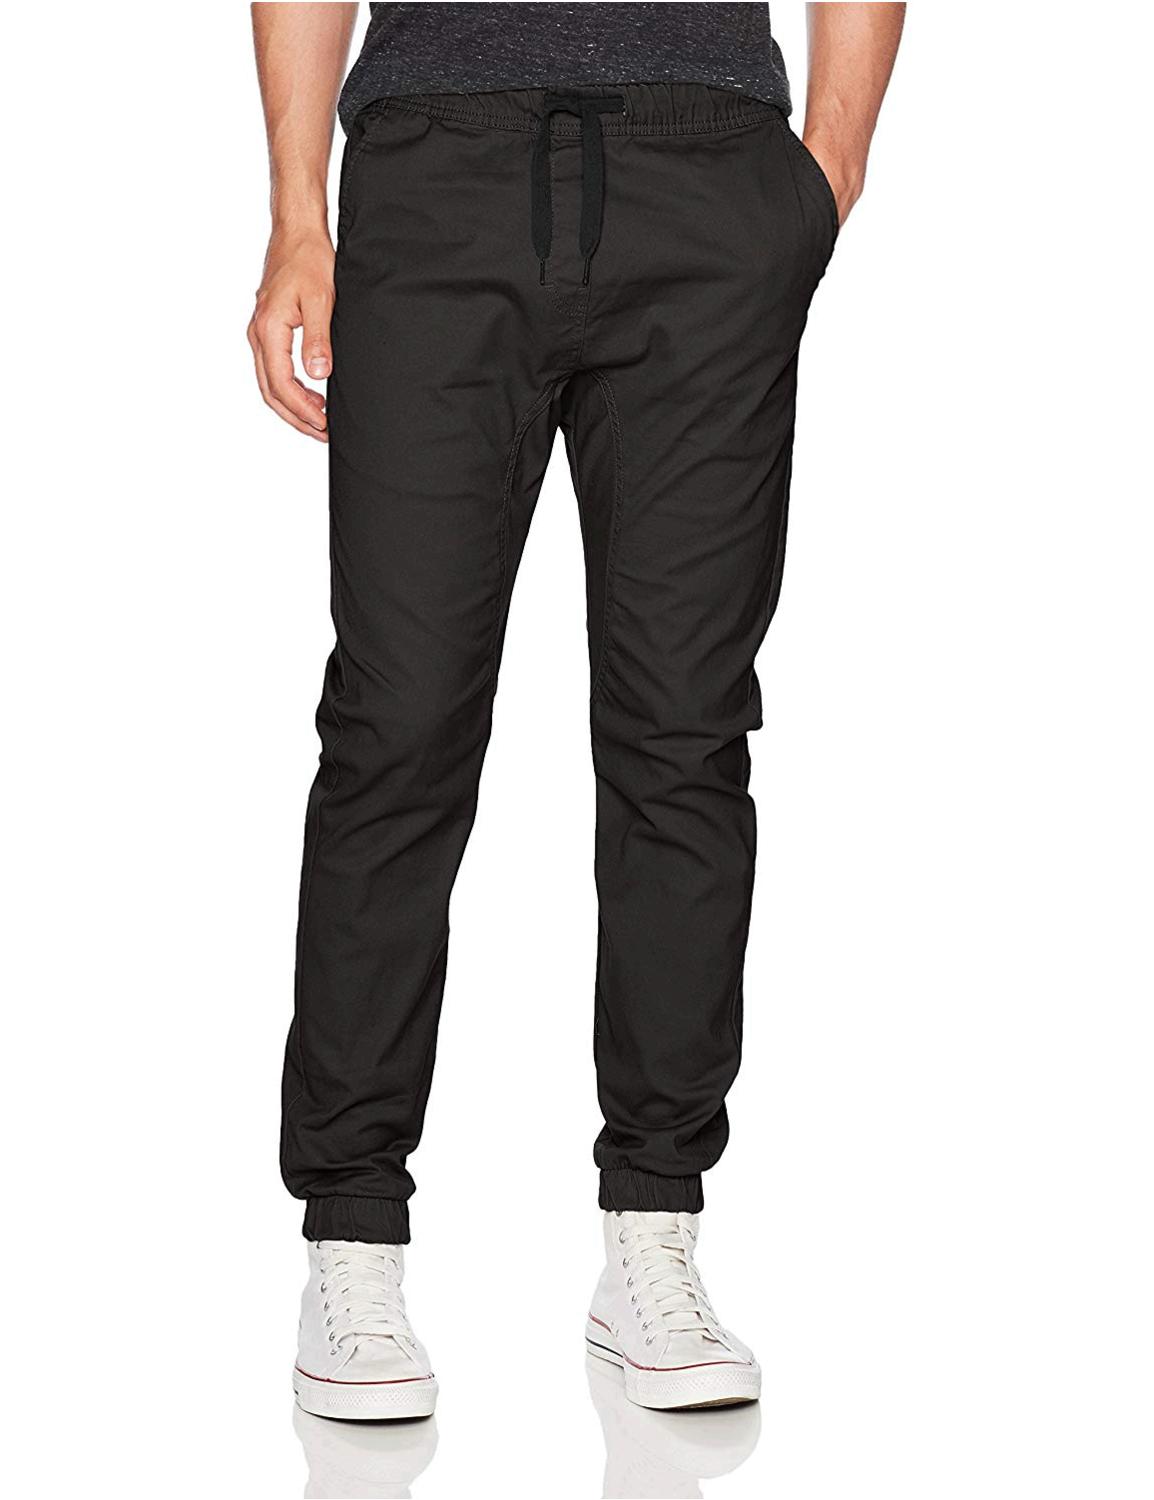 WT02 Men's Jogger Pants in Basic Solid Colors, Black(all Season), Size ...